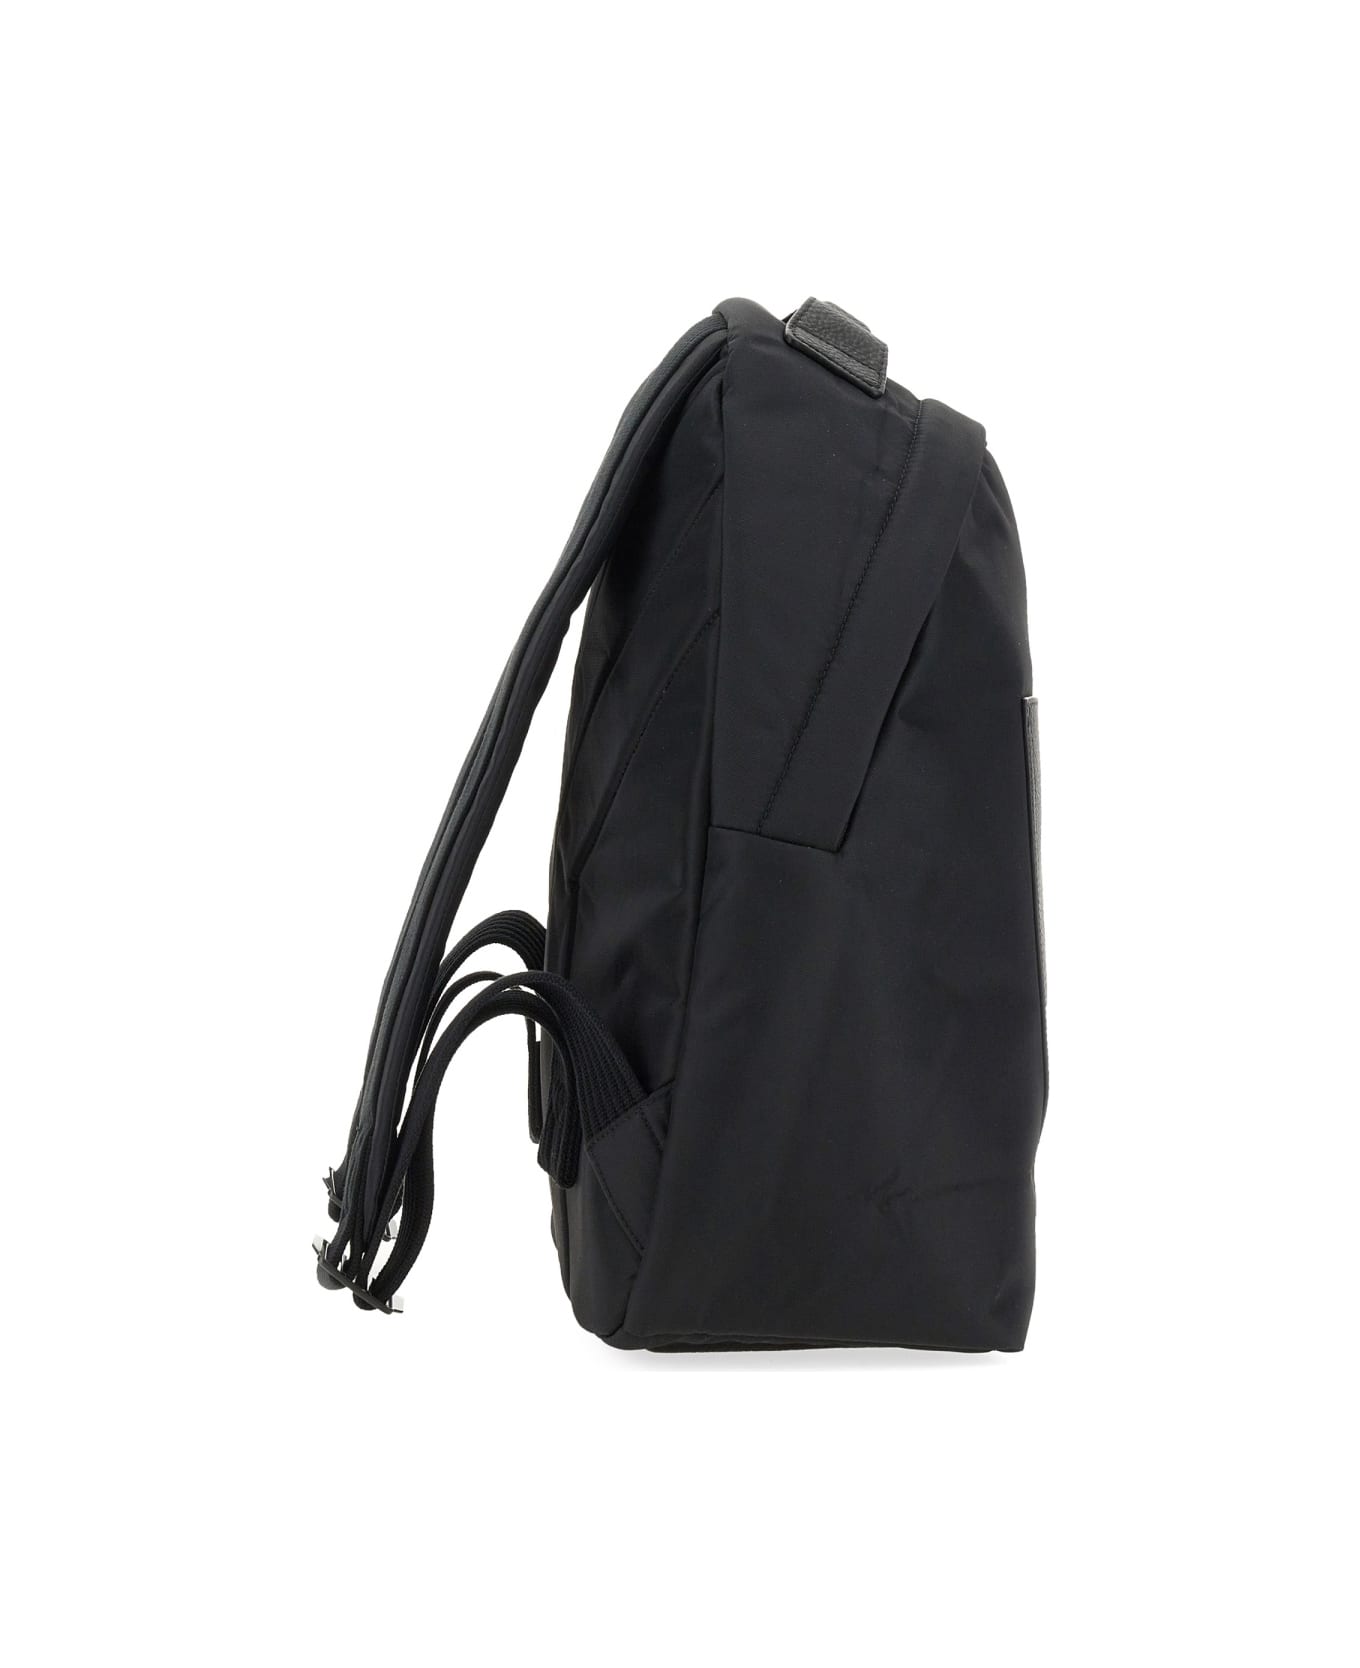 Y-3 Nylon Backpack - BLACK バックパック